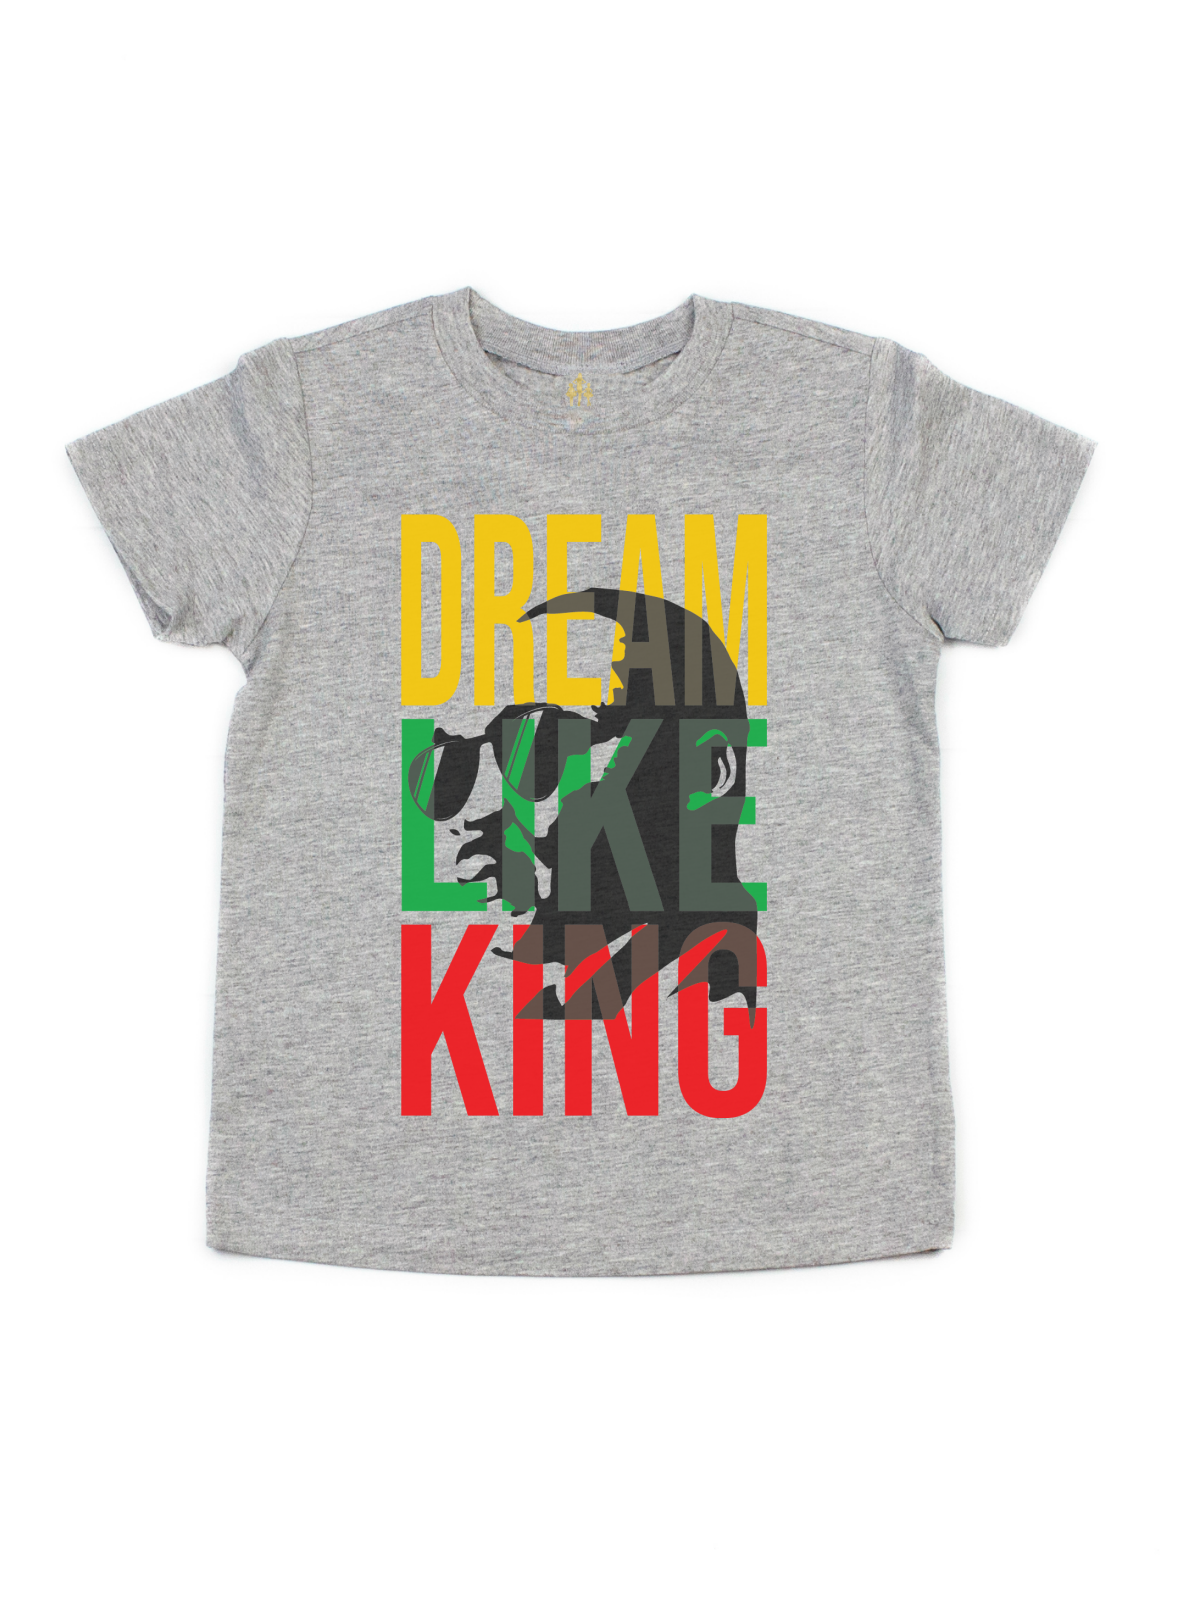 Dream like King Kids Shirt